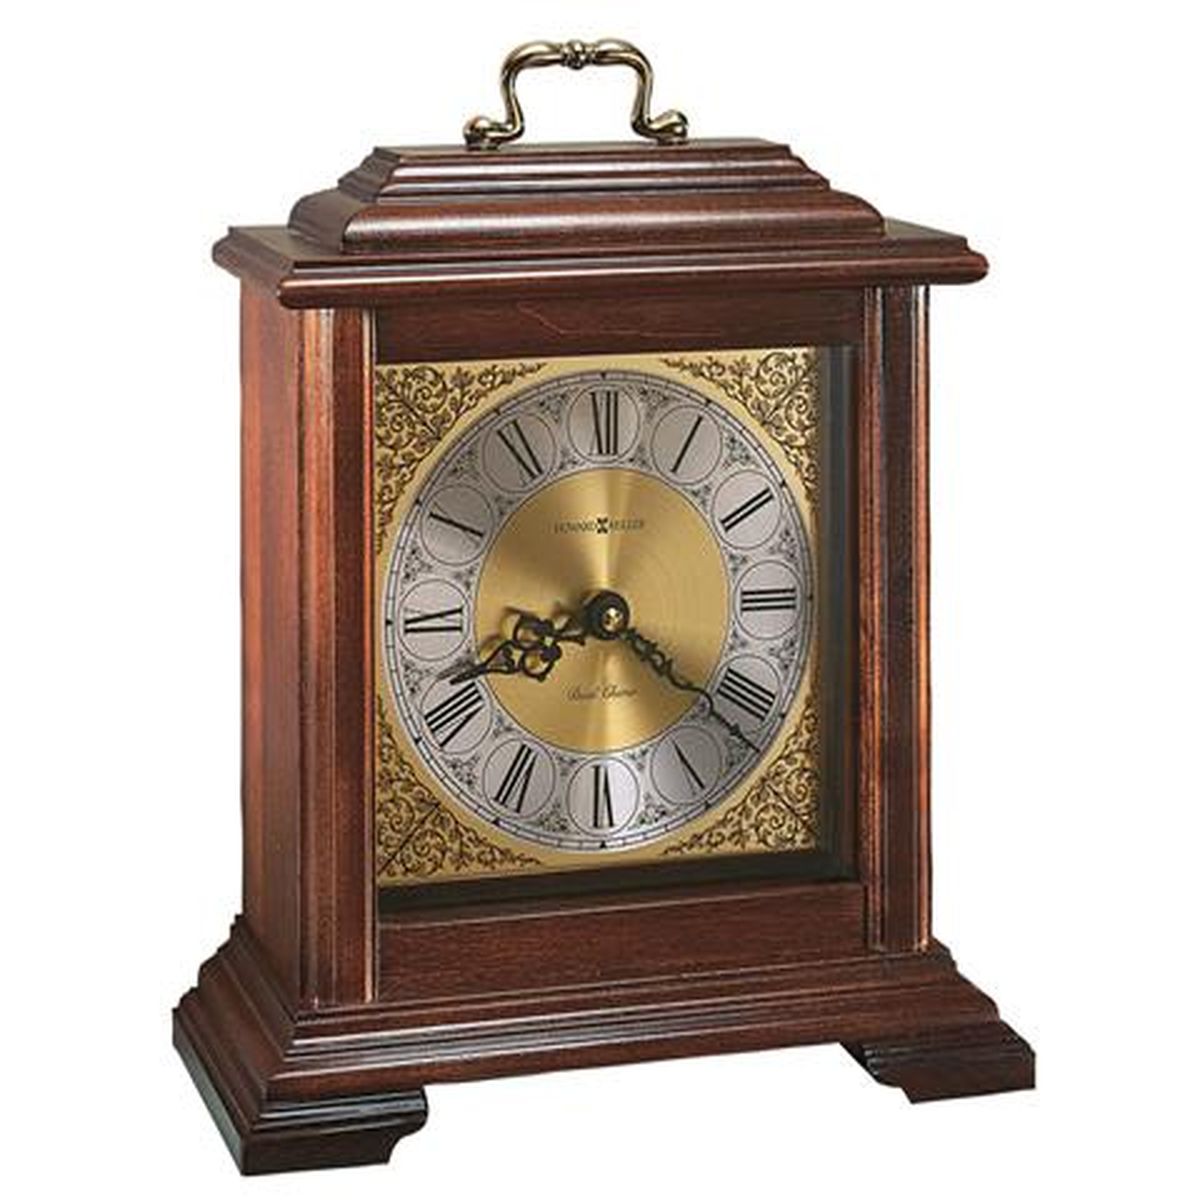 Finding A Reputable Howard Miller Clock Repair, Service Center, and Dealer in Massachusetts